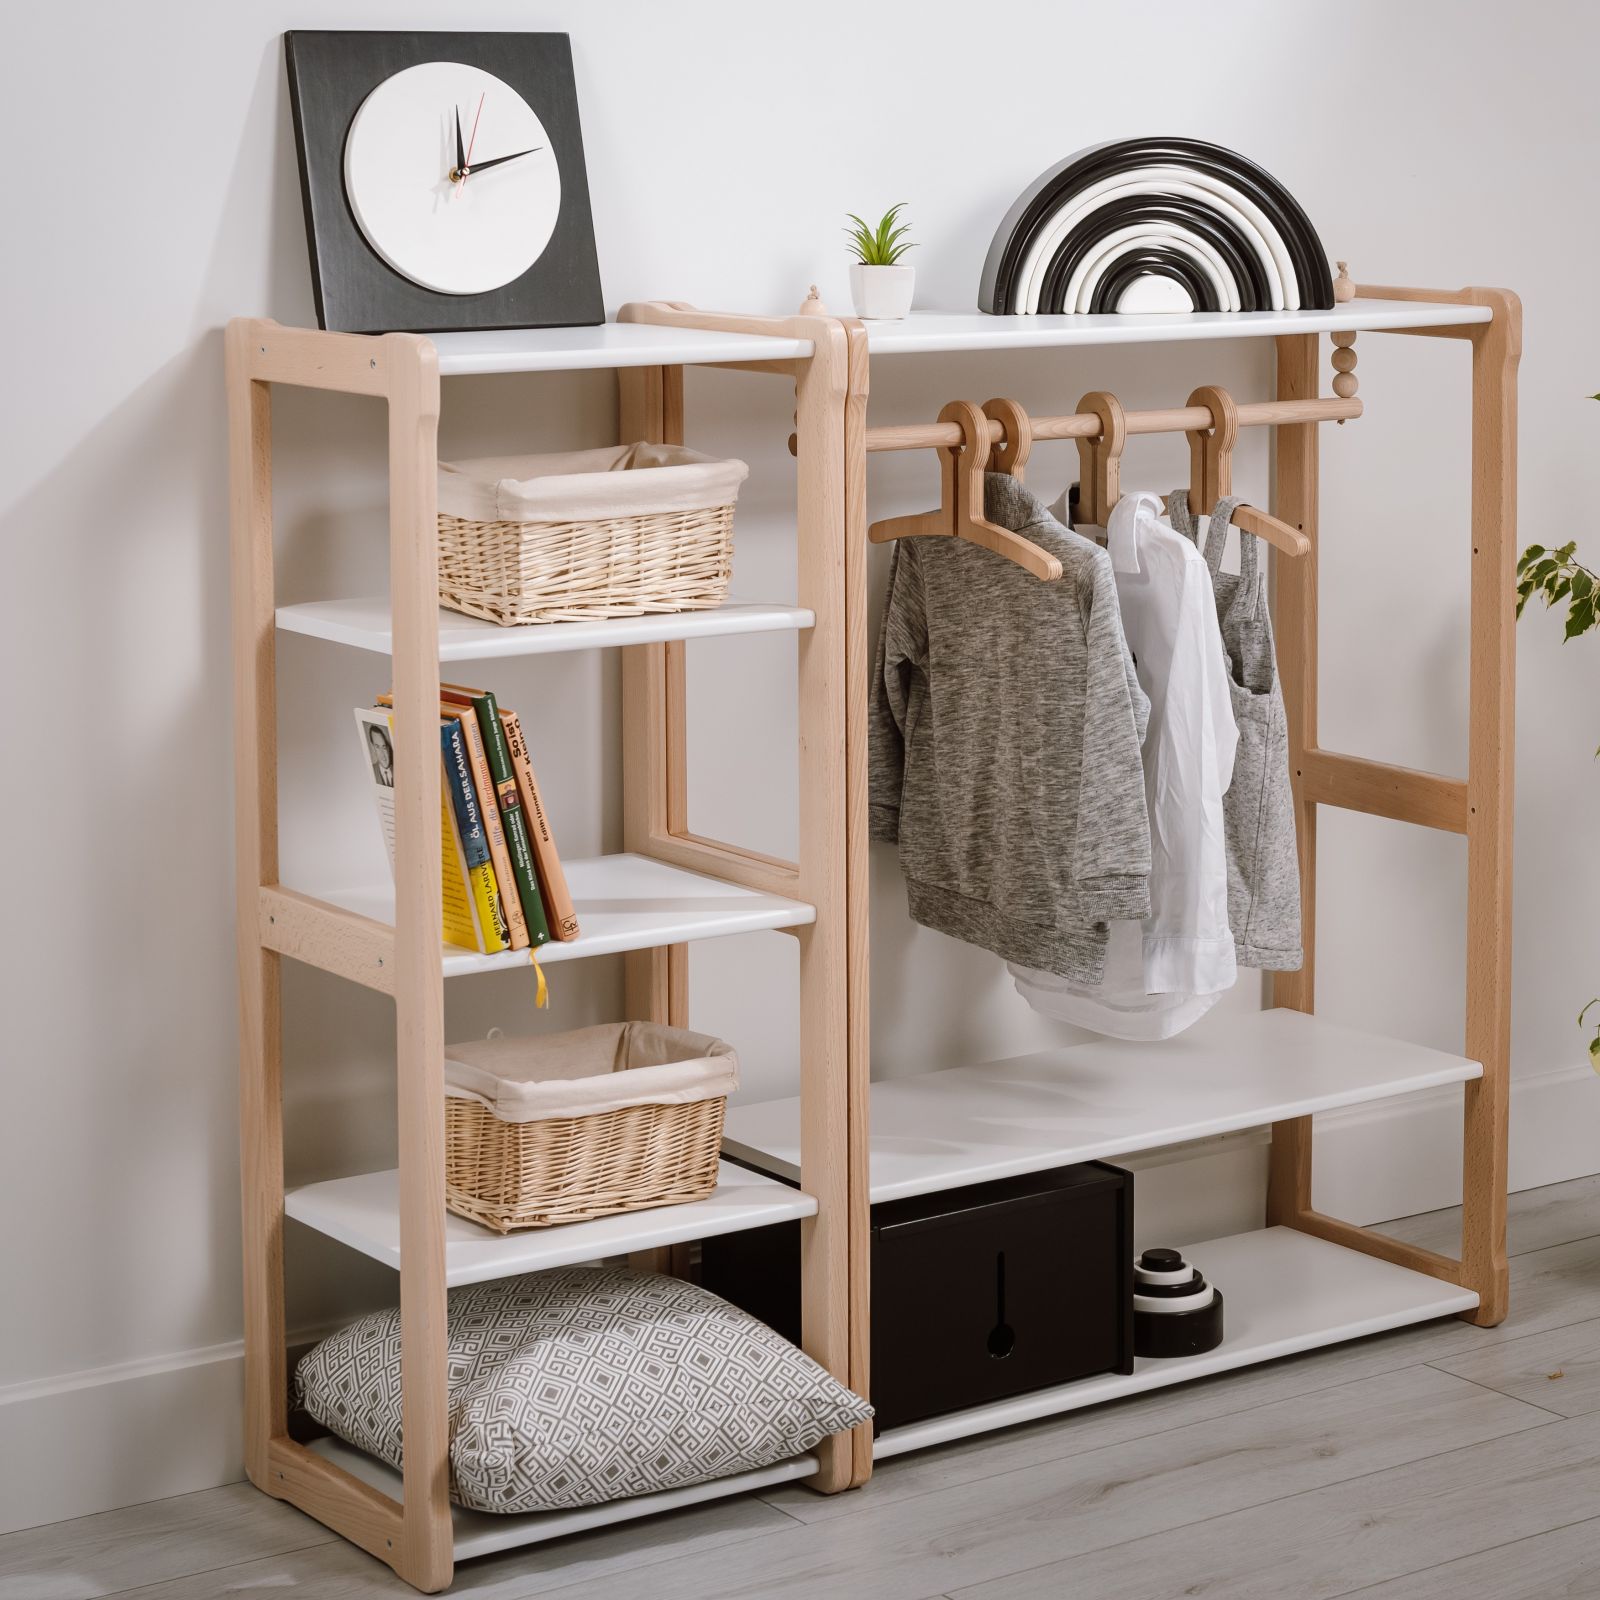 Child Montessori clothing rack type B with shelf combined with Montessori MAXI shelf